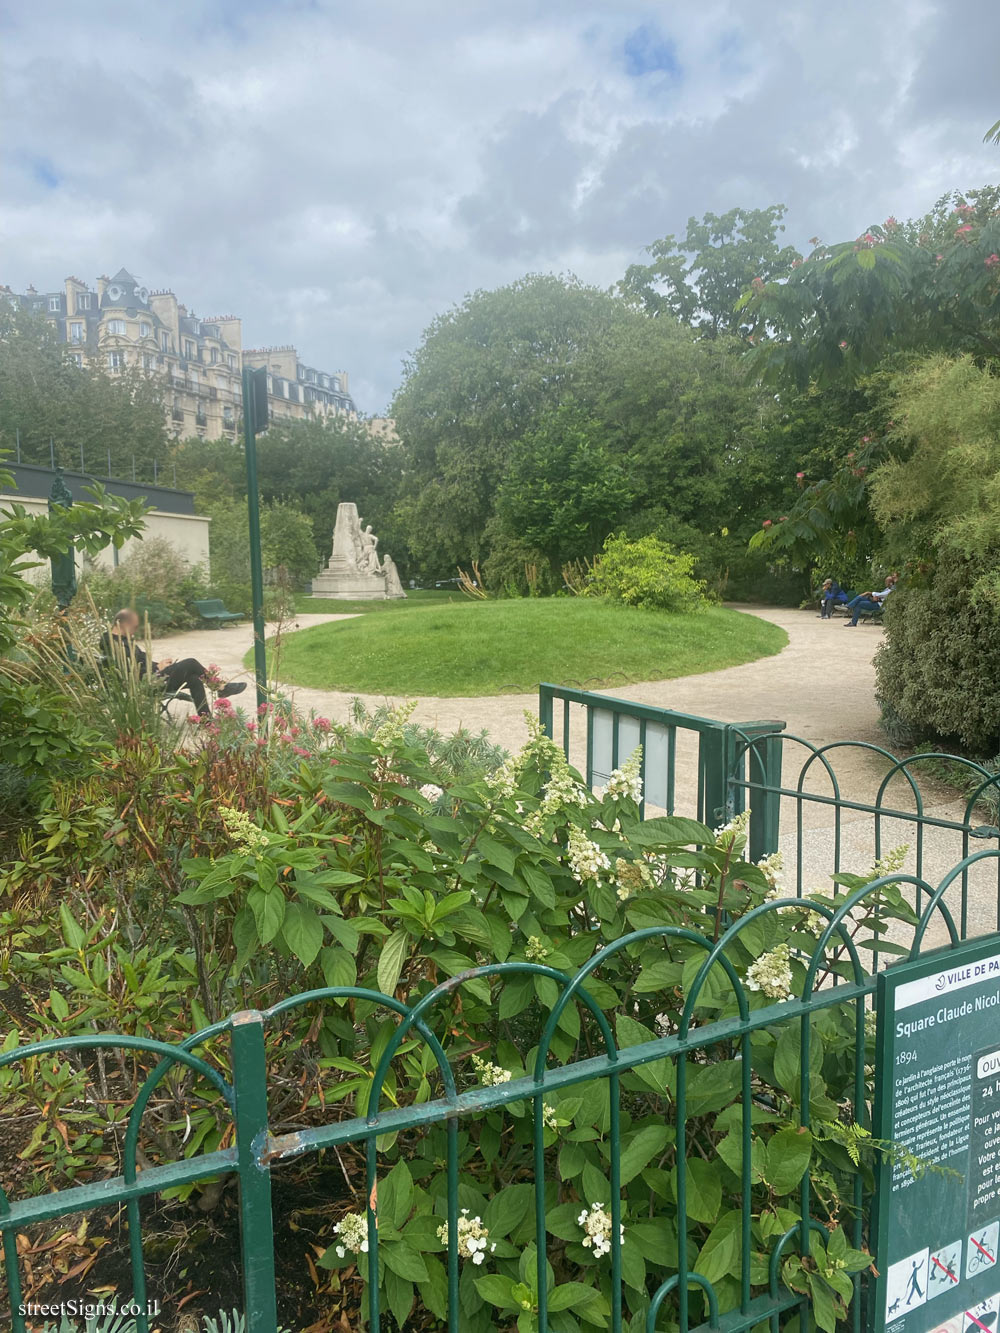 Paris - Gardens - Square Claude Nicolas Ledoux - 2 Av. du Colonel Henri Rol-Tanguy, 75014 Paris, France